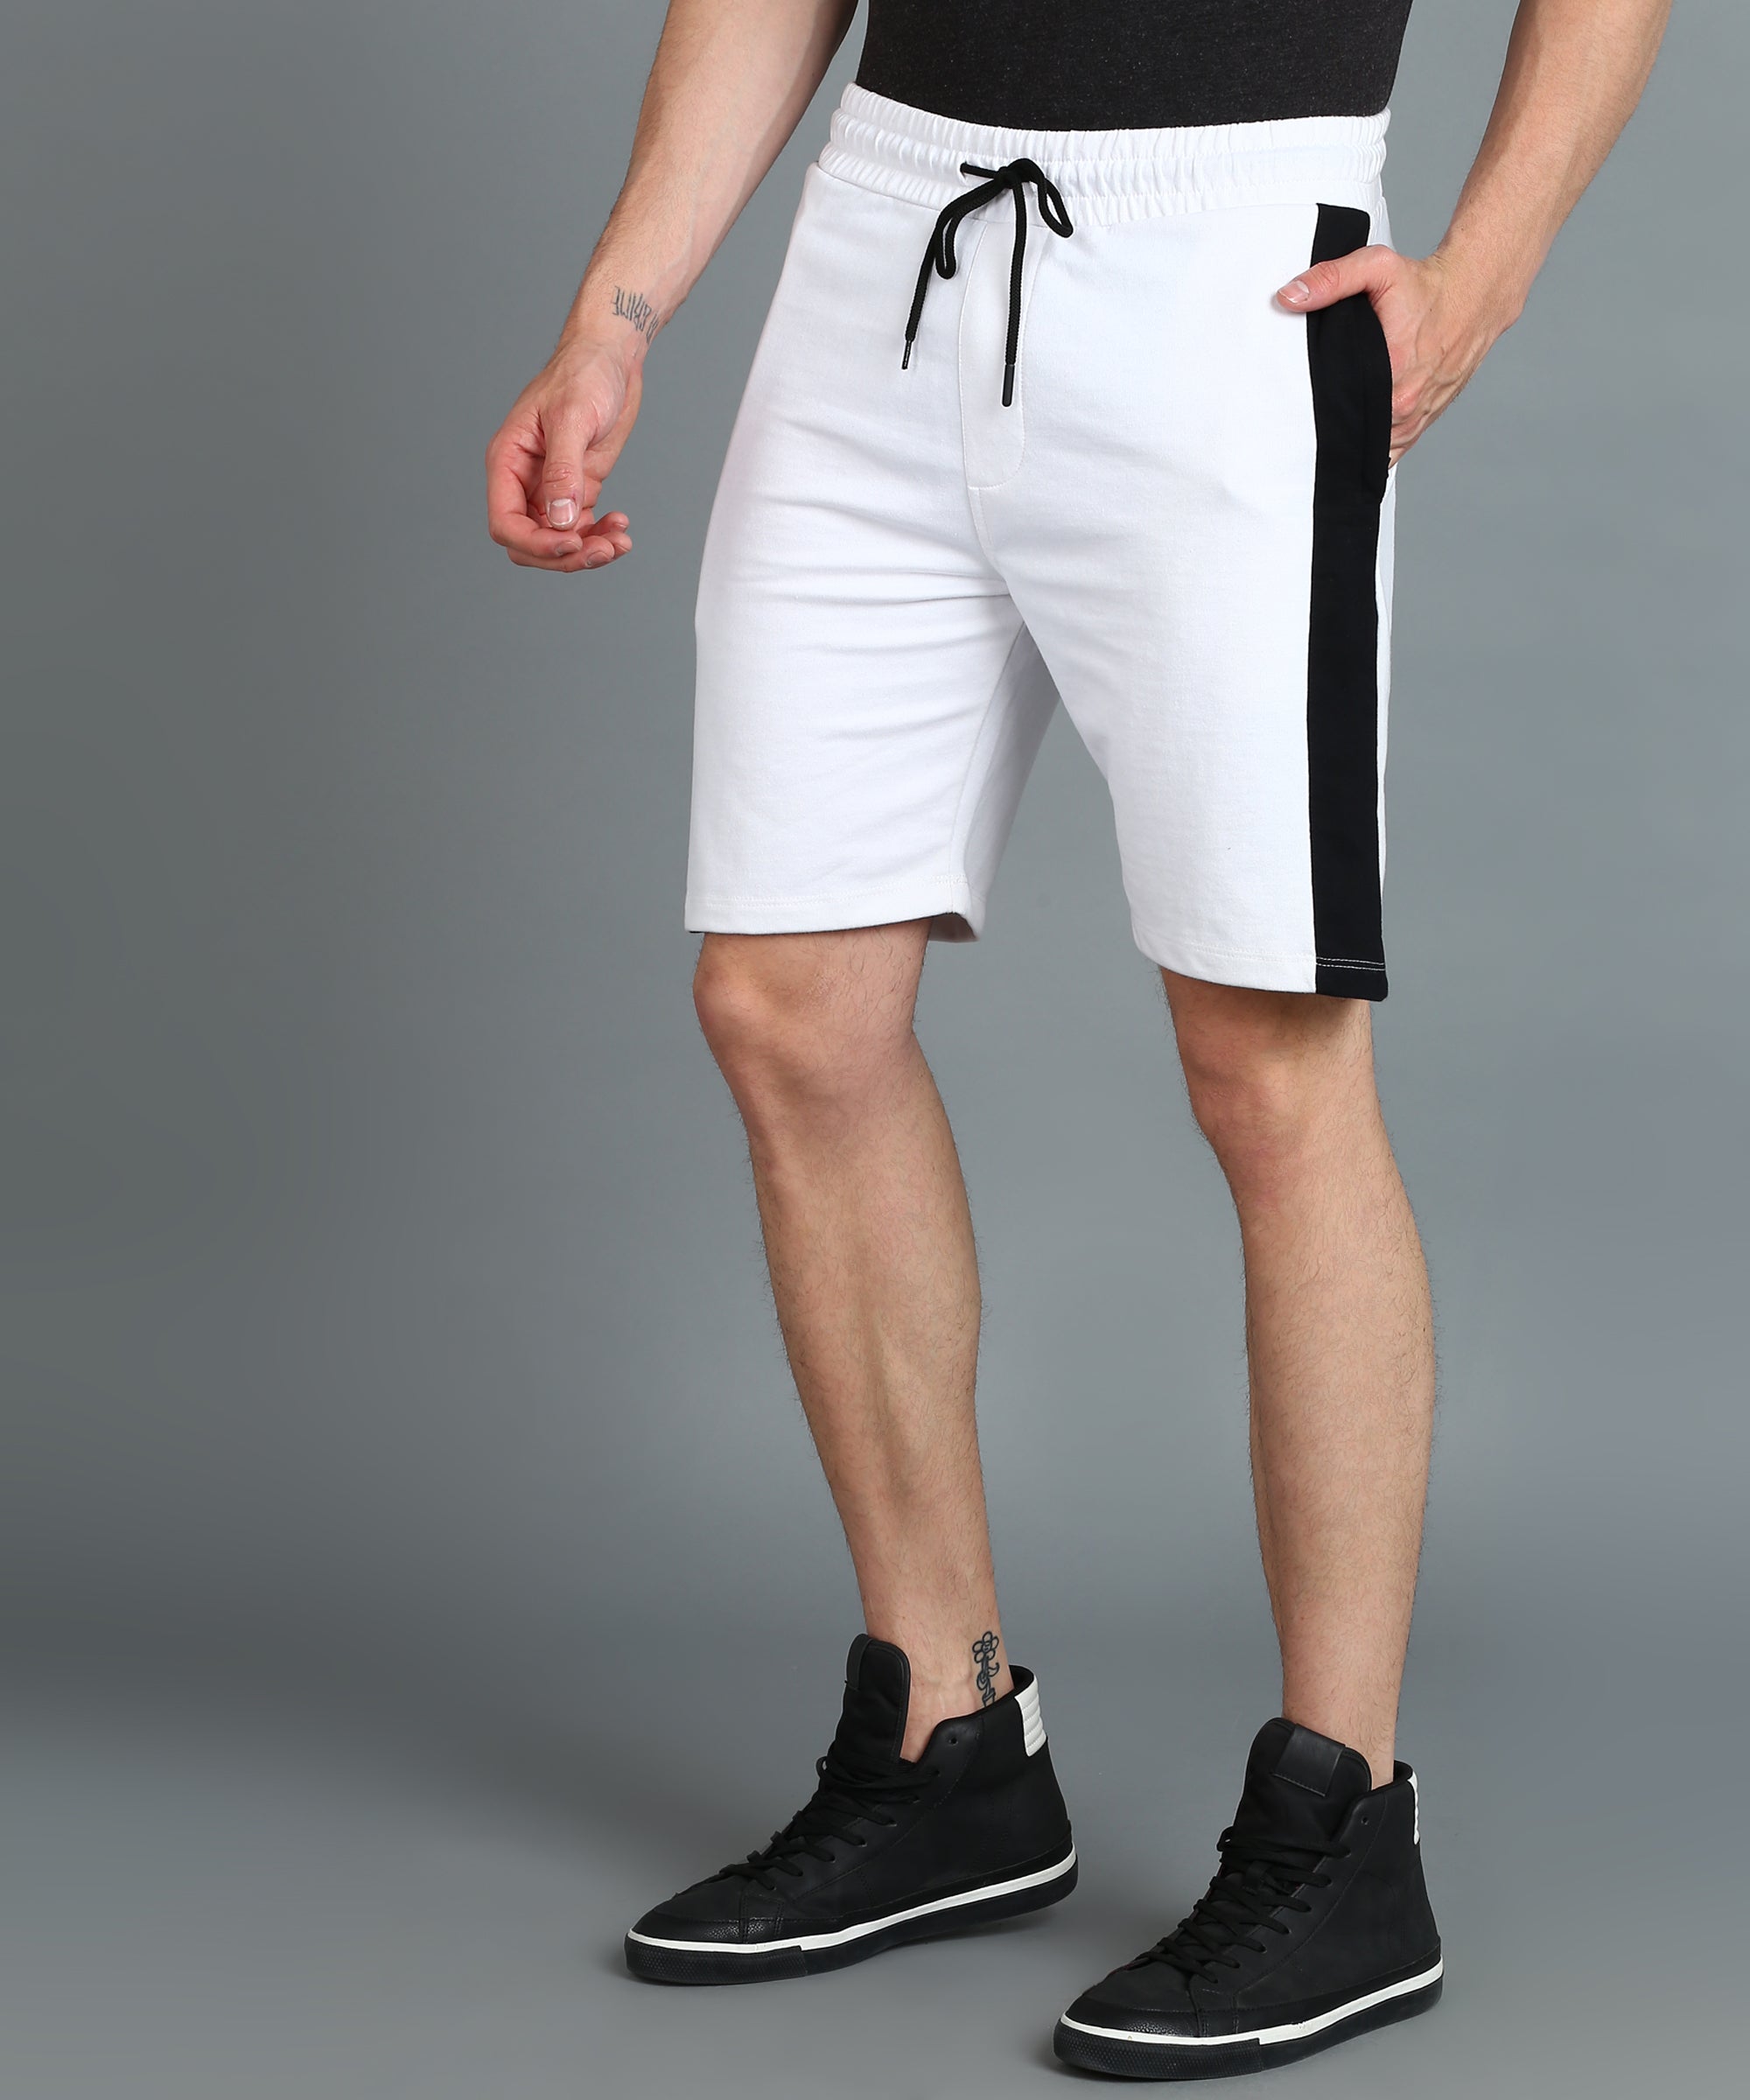 Urbano Fashion Men's White Cotton Color-Block Regular Shorts Stretchable